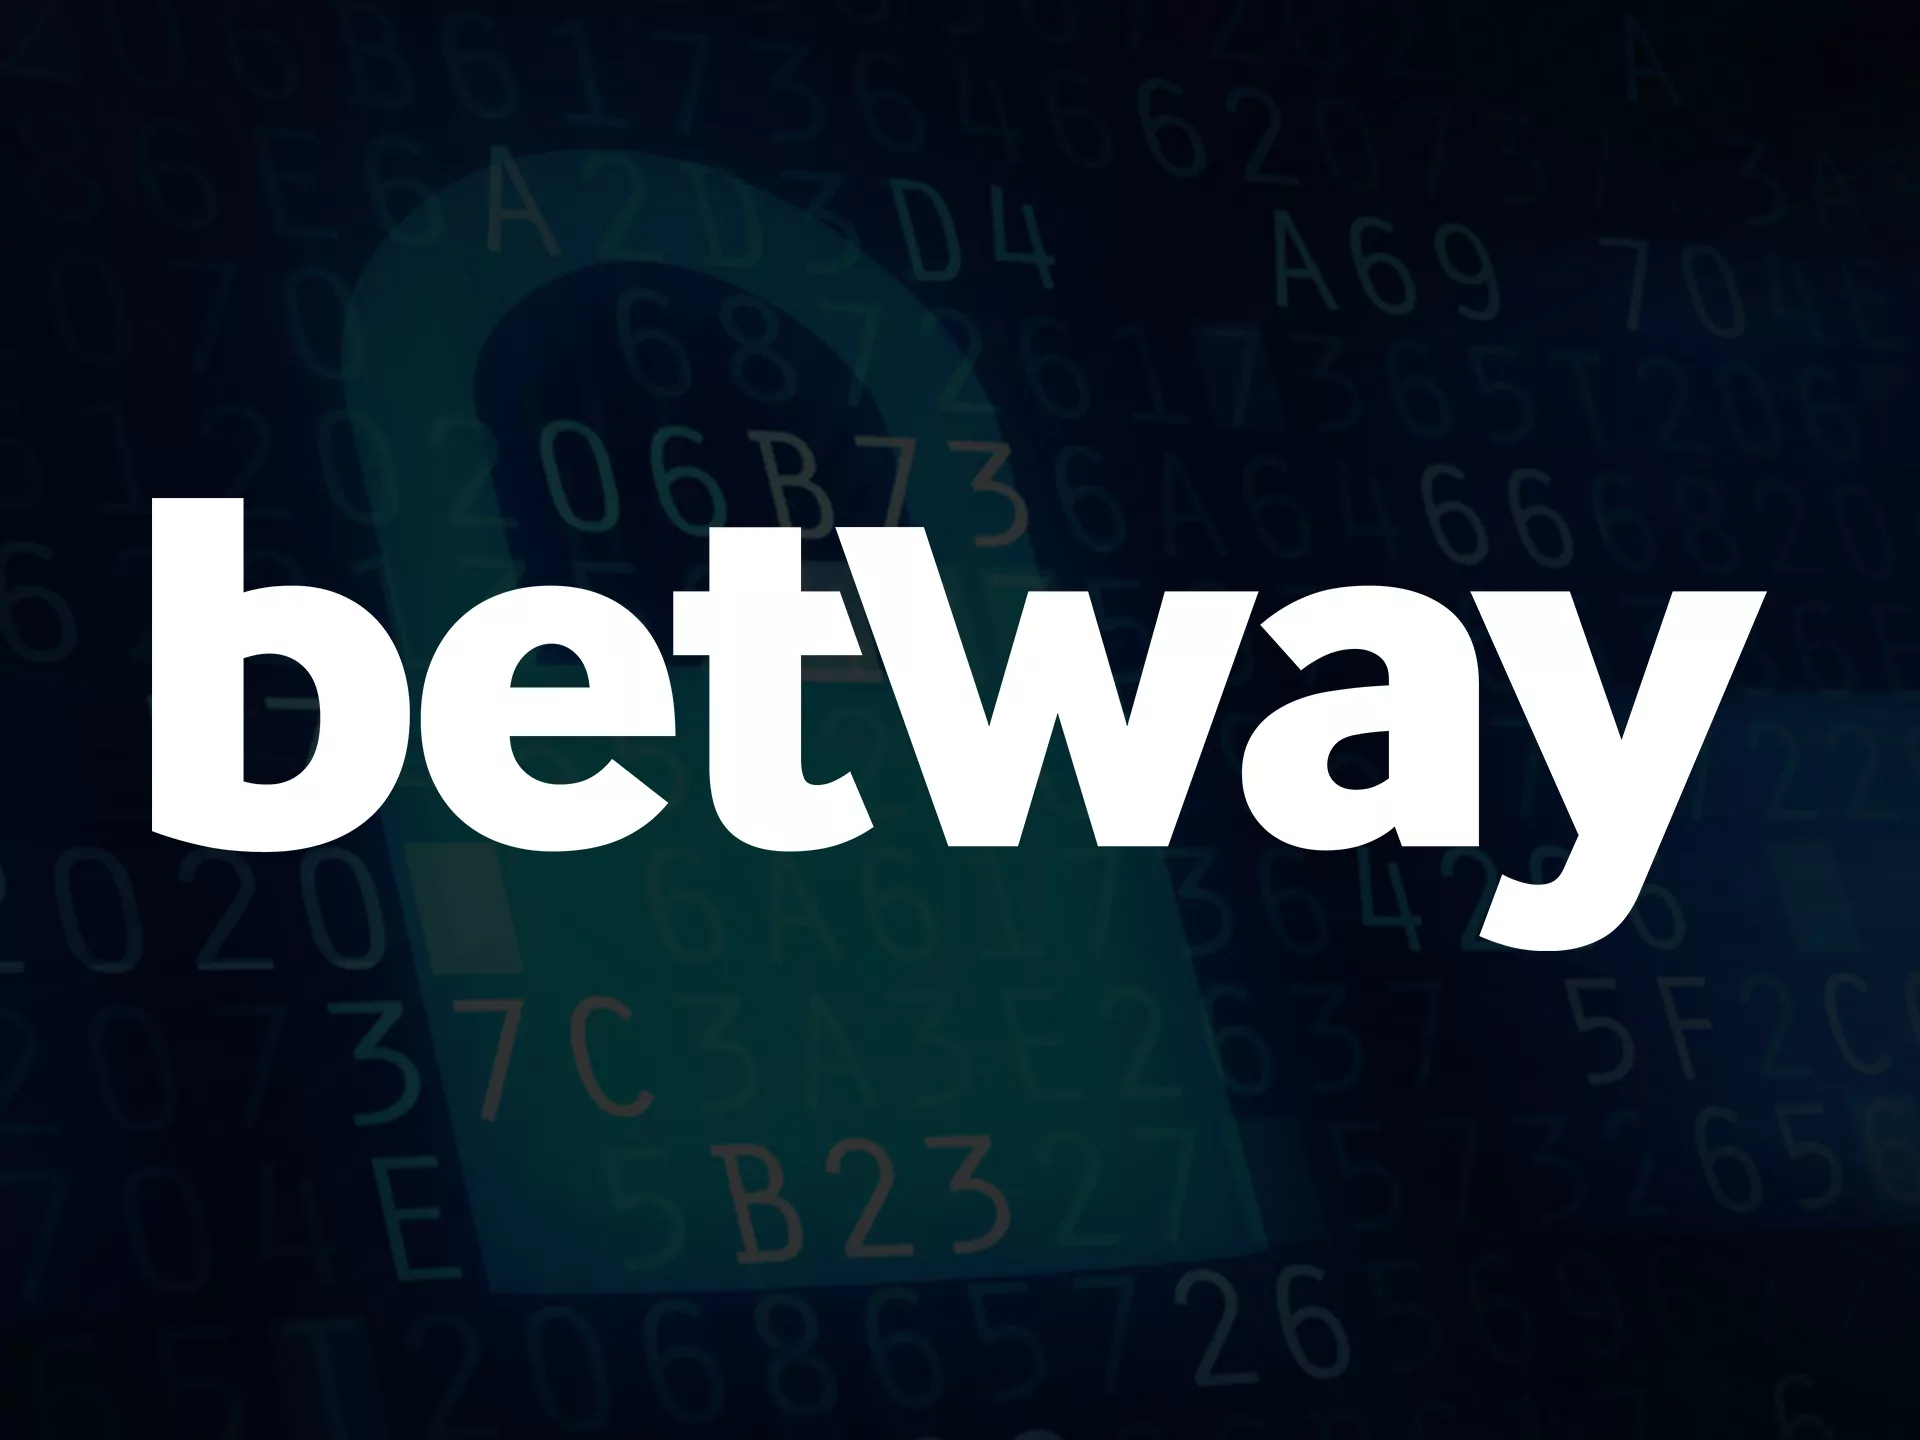 Betway has best information security.